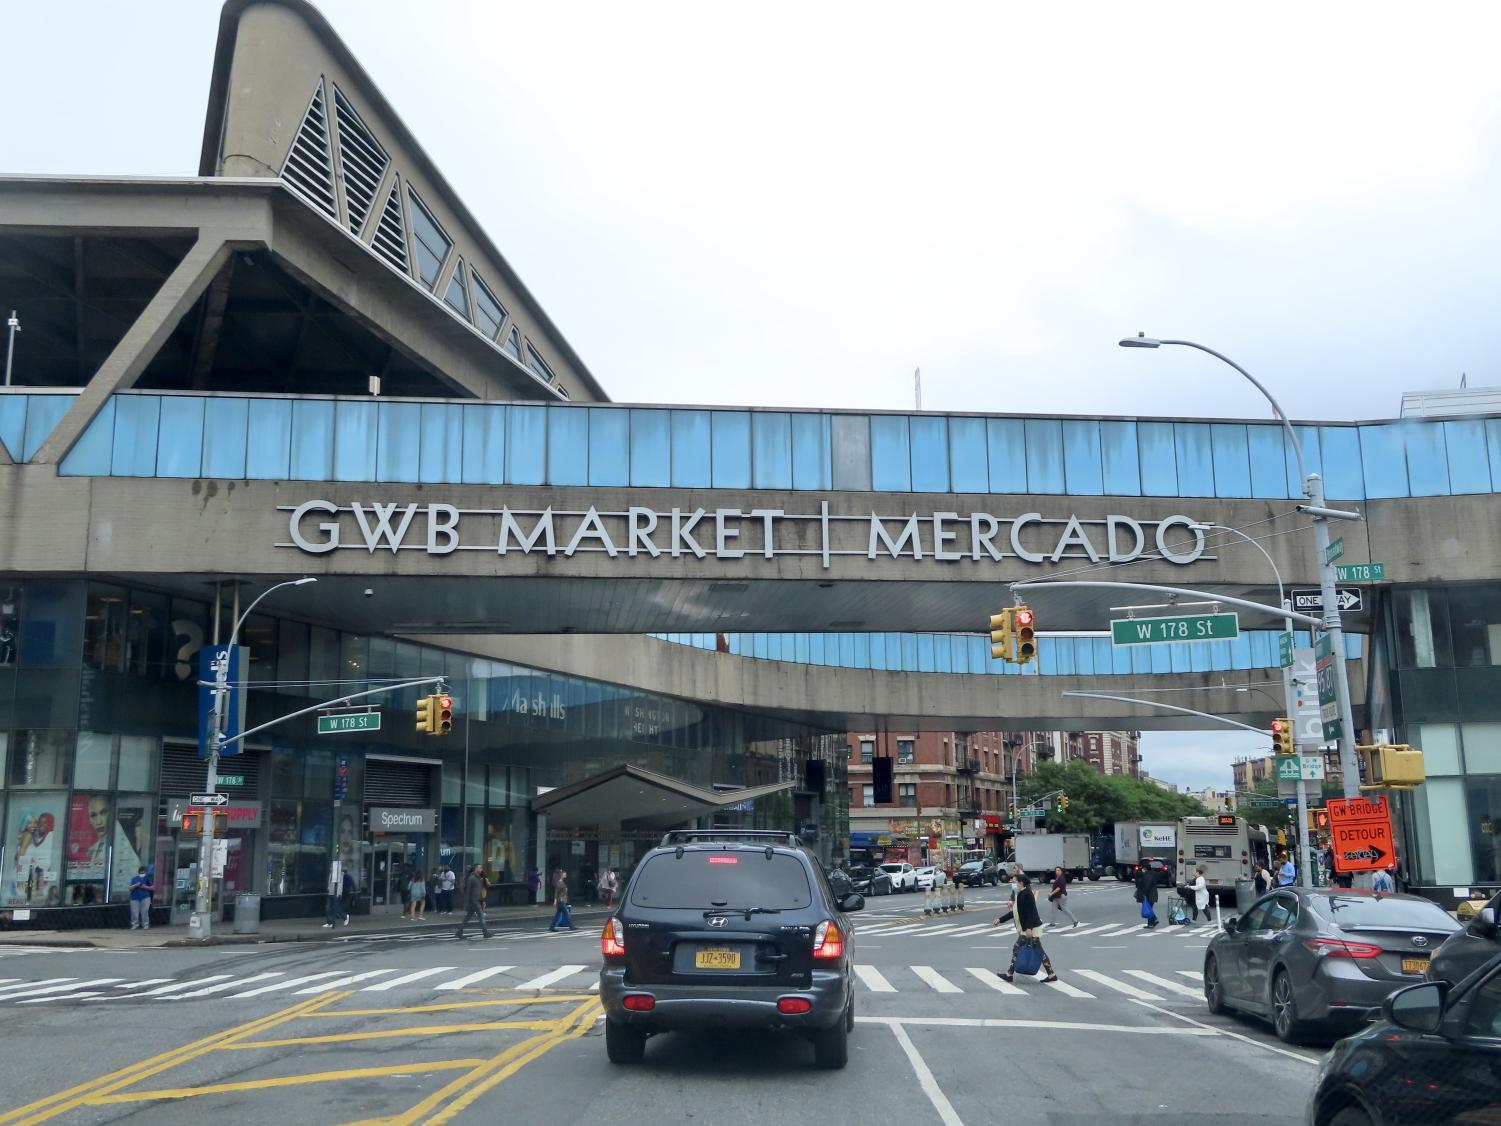 the George Washington bridge bus station, labeled with "mercado," designating a market inside